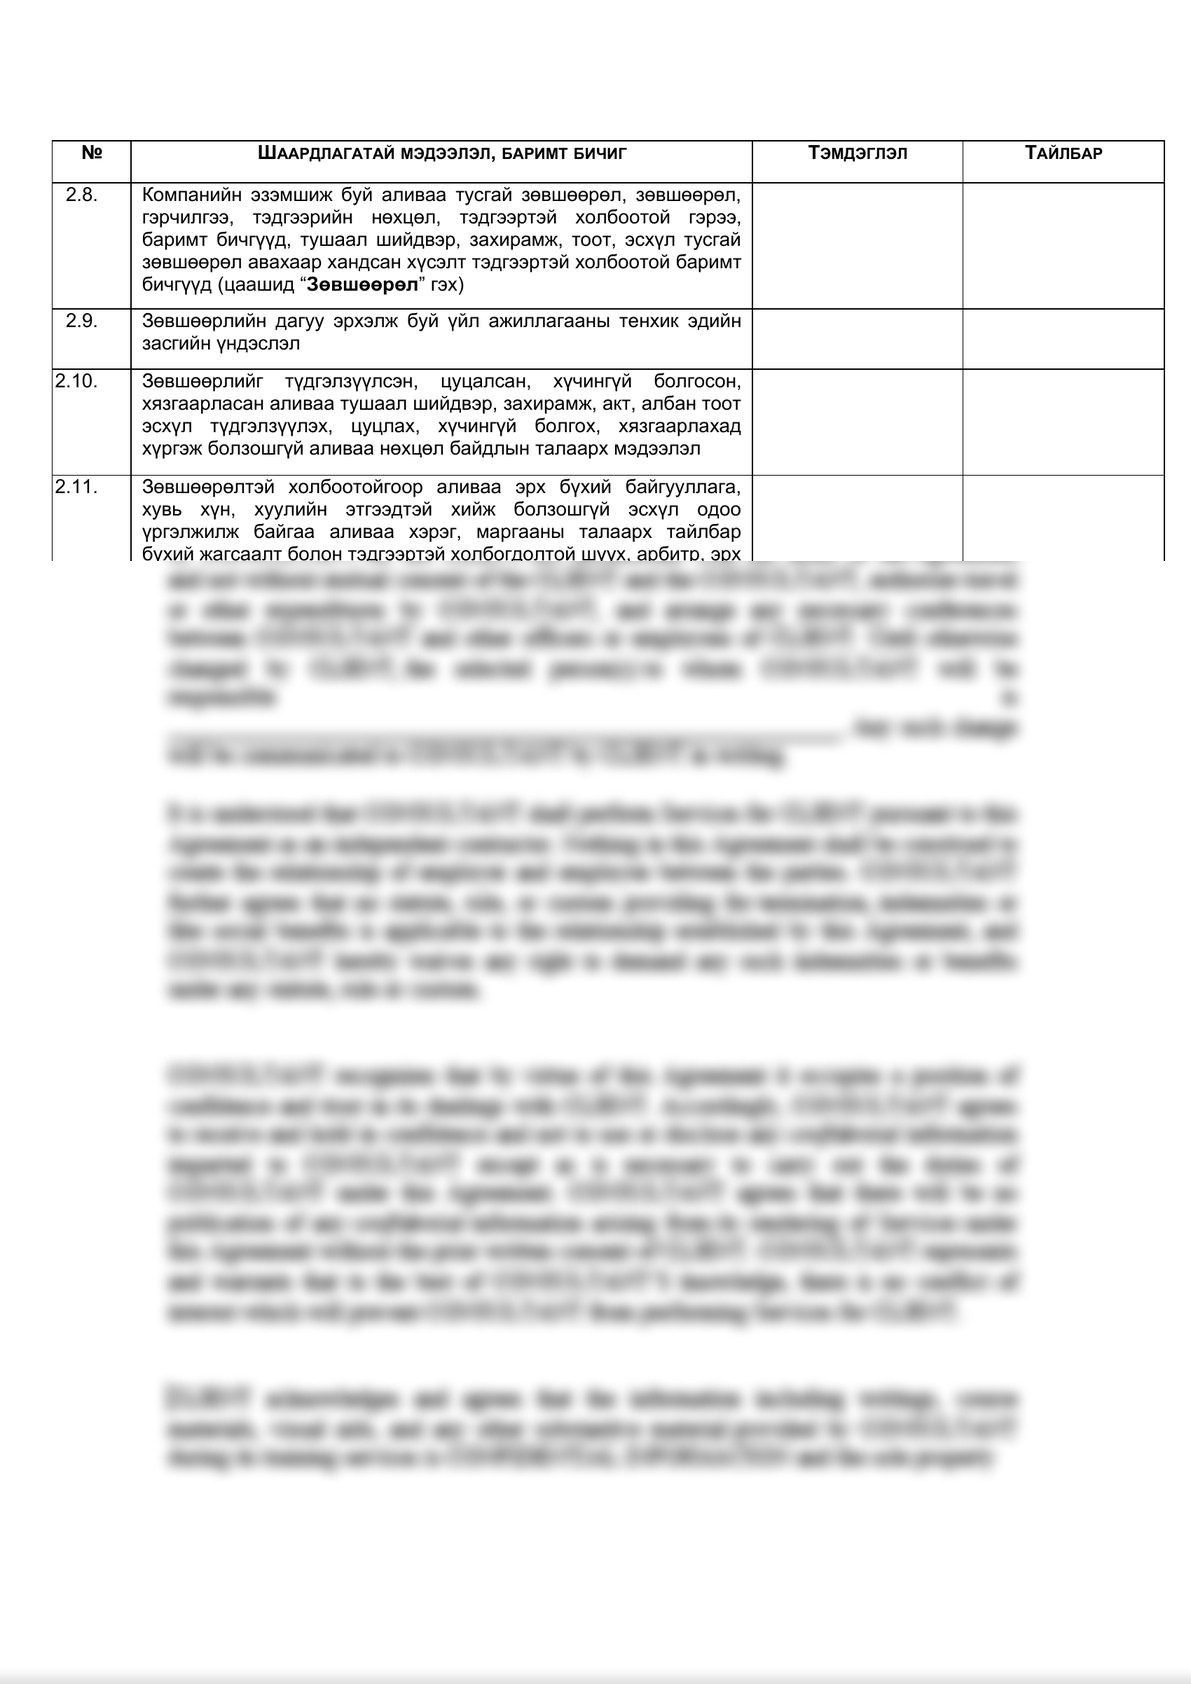 Legal due diligence checklist (Mongolian legal entities)    -7